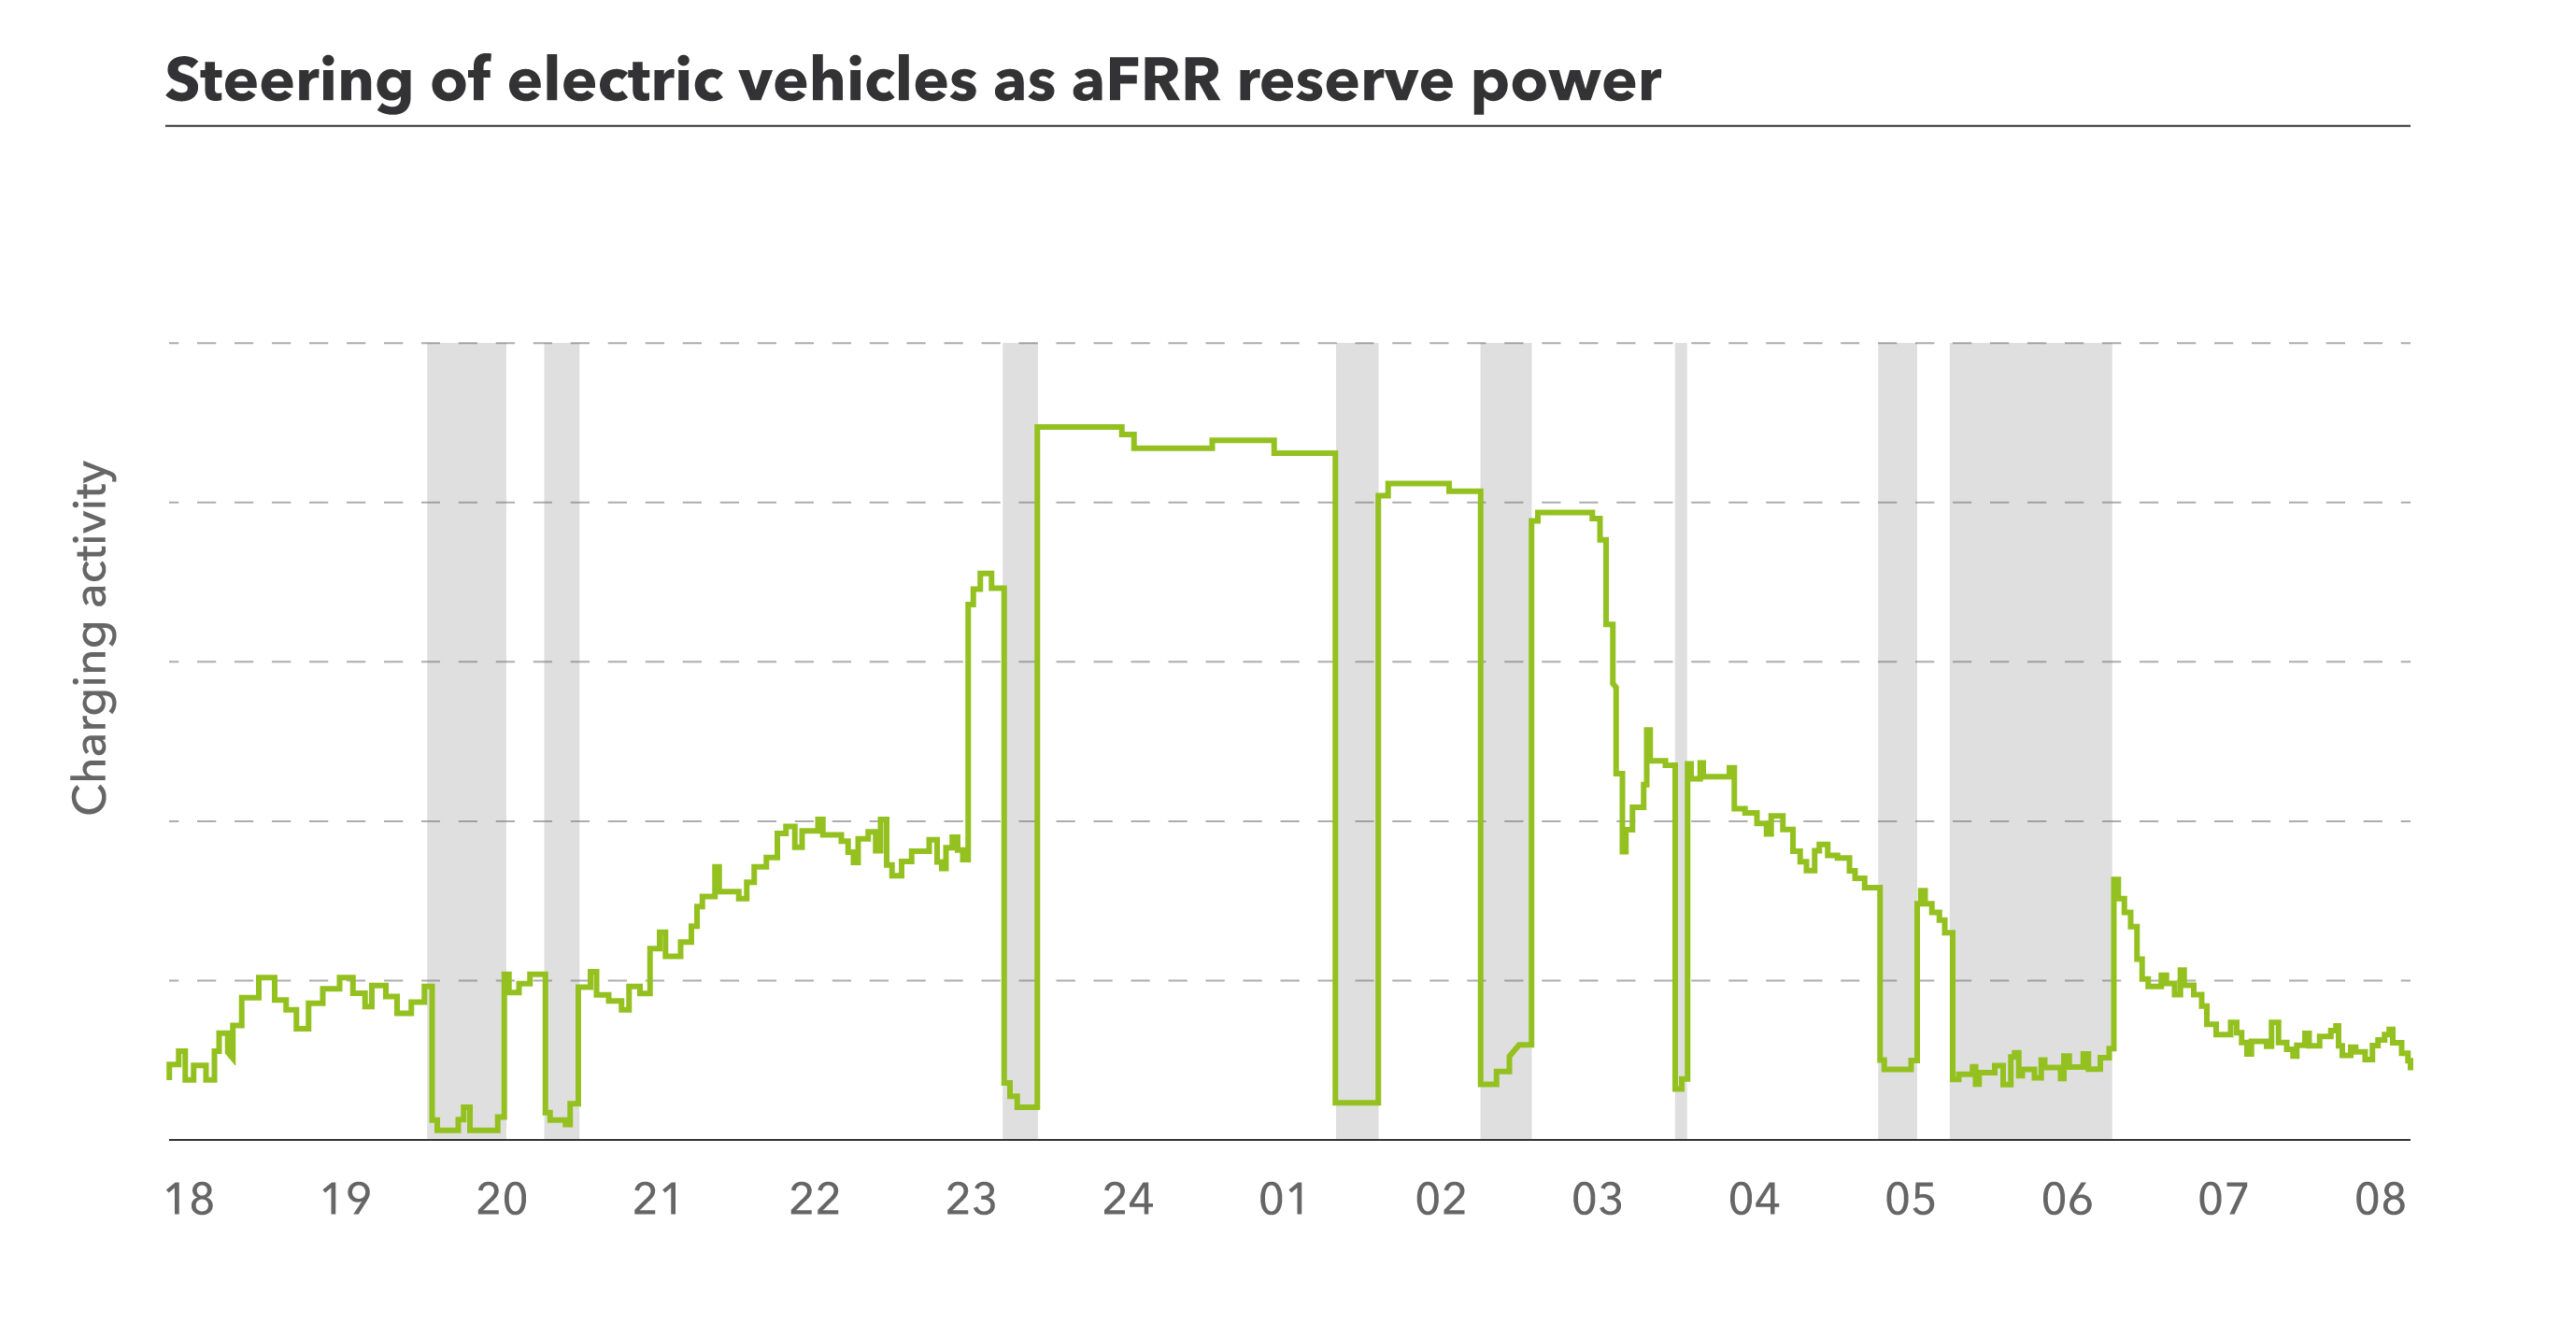 Providing control reserve through electric vehicles